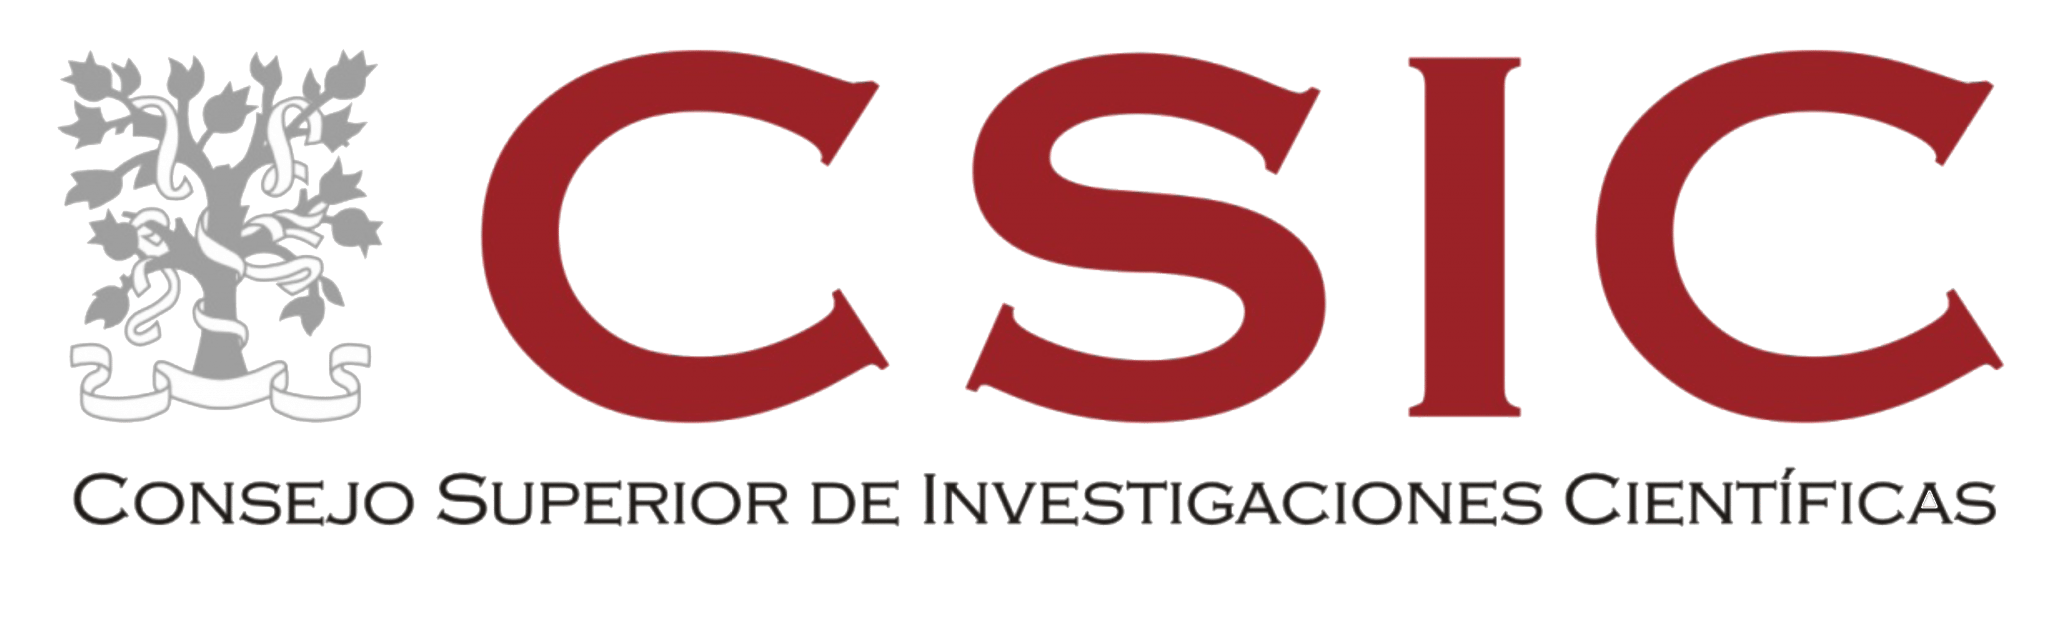 CSIC_logo copy